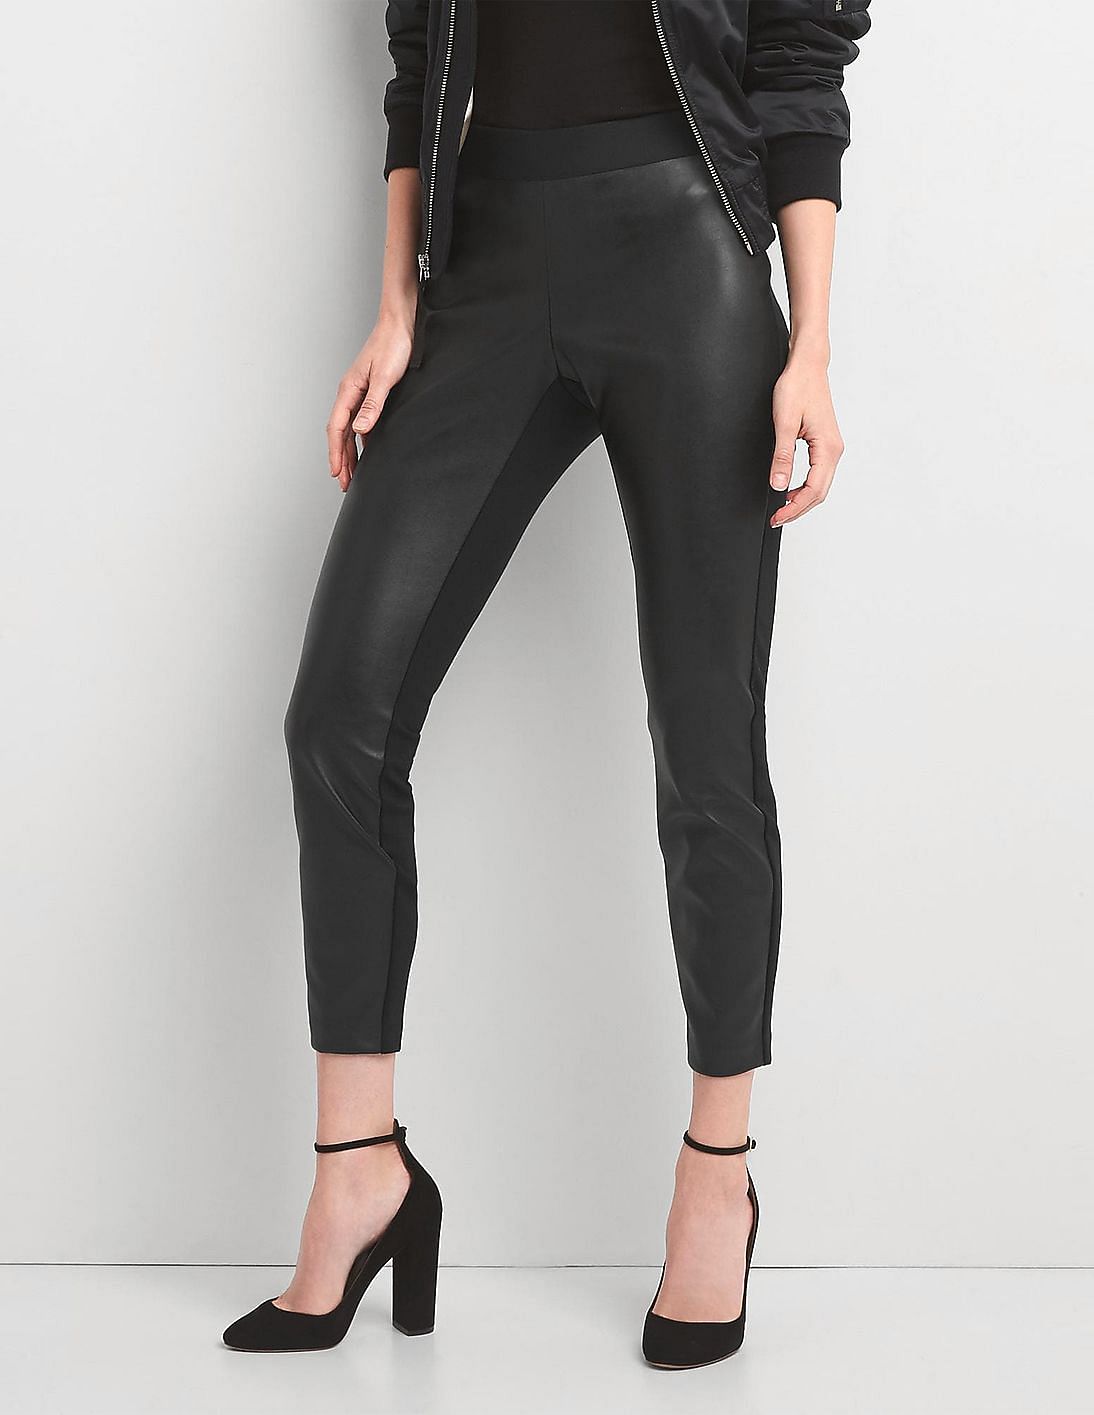 Gap Womens Size 16 Black 100% Leather Boot Cut Pants (s)